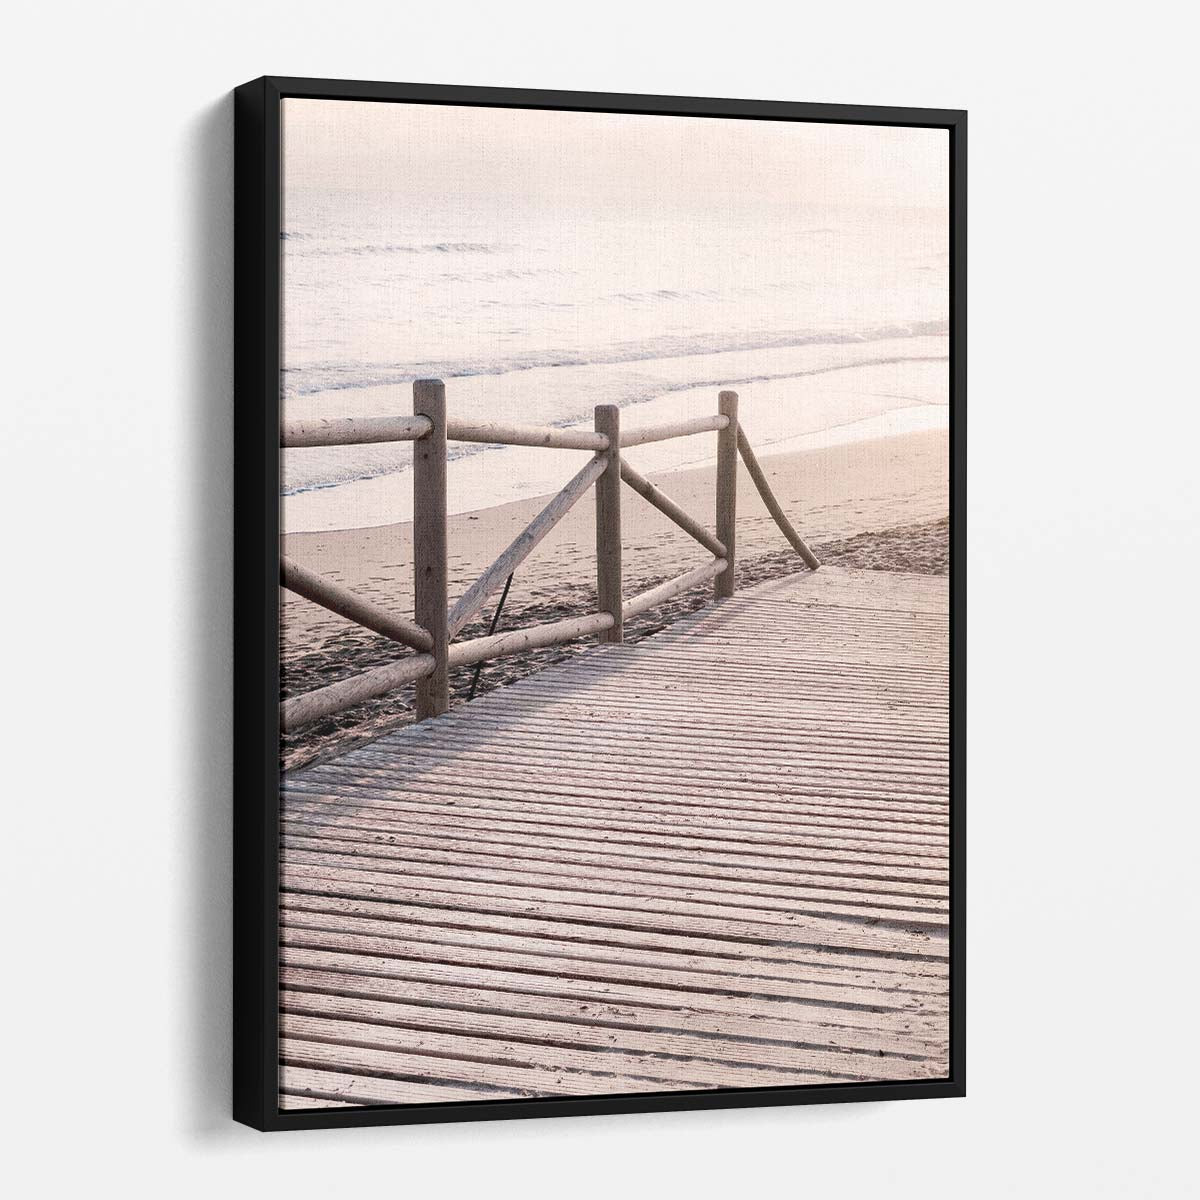 Coastal Landscape Photography Beach, Sea, Sand, Boardwalk Seascape by Luxuriance Designs, made in USA